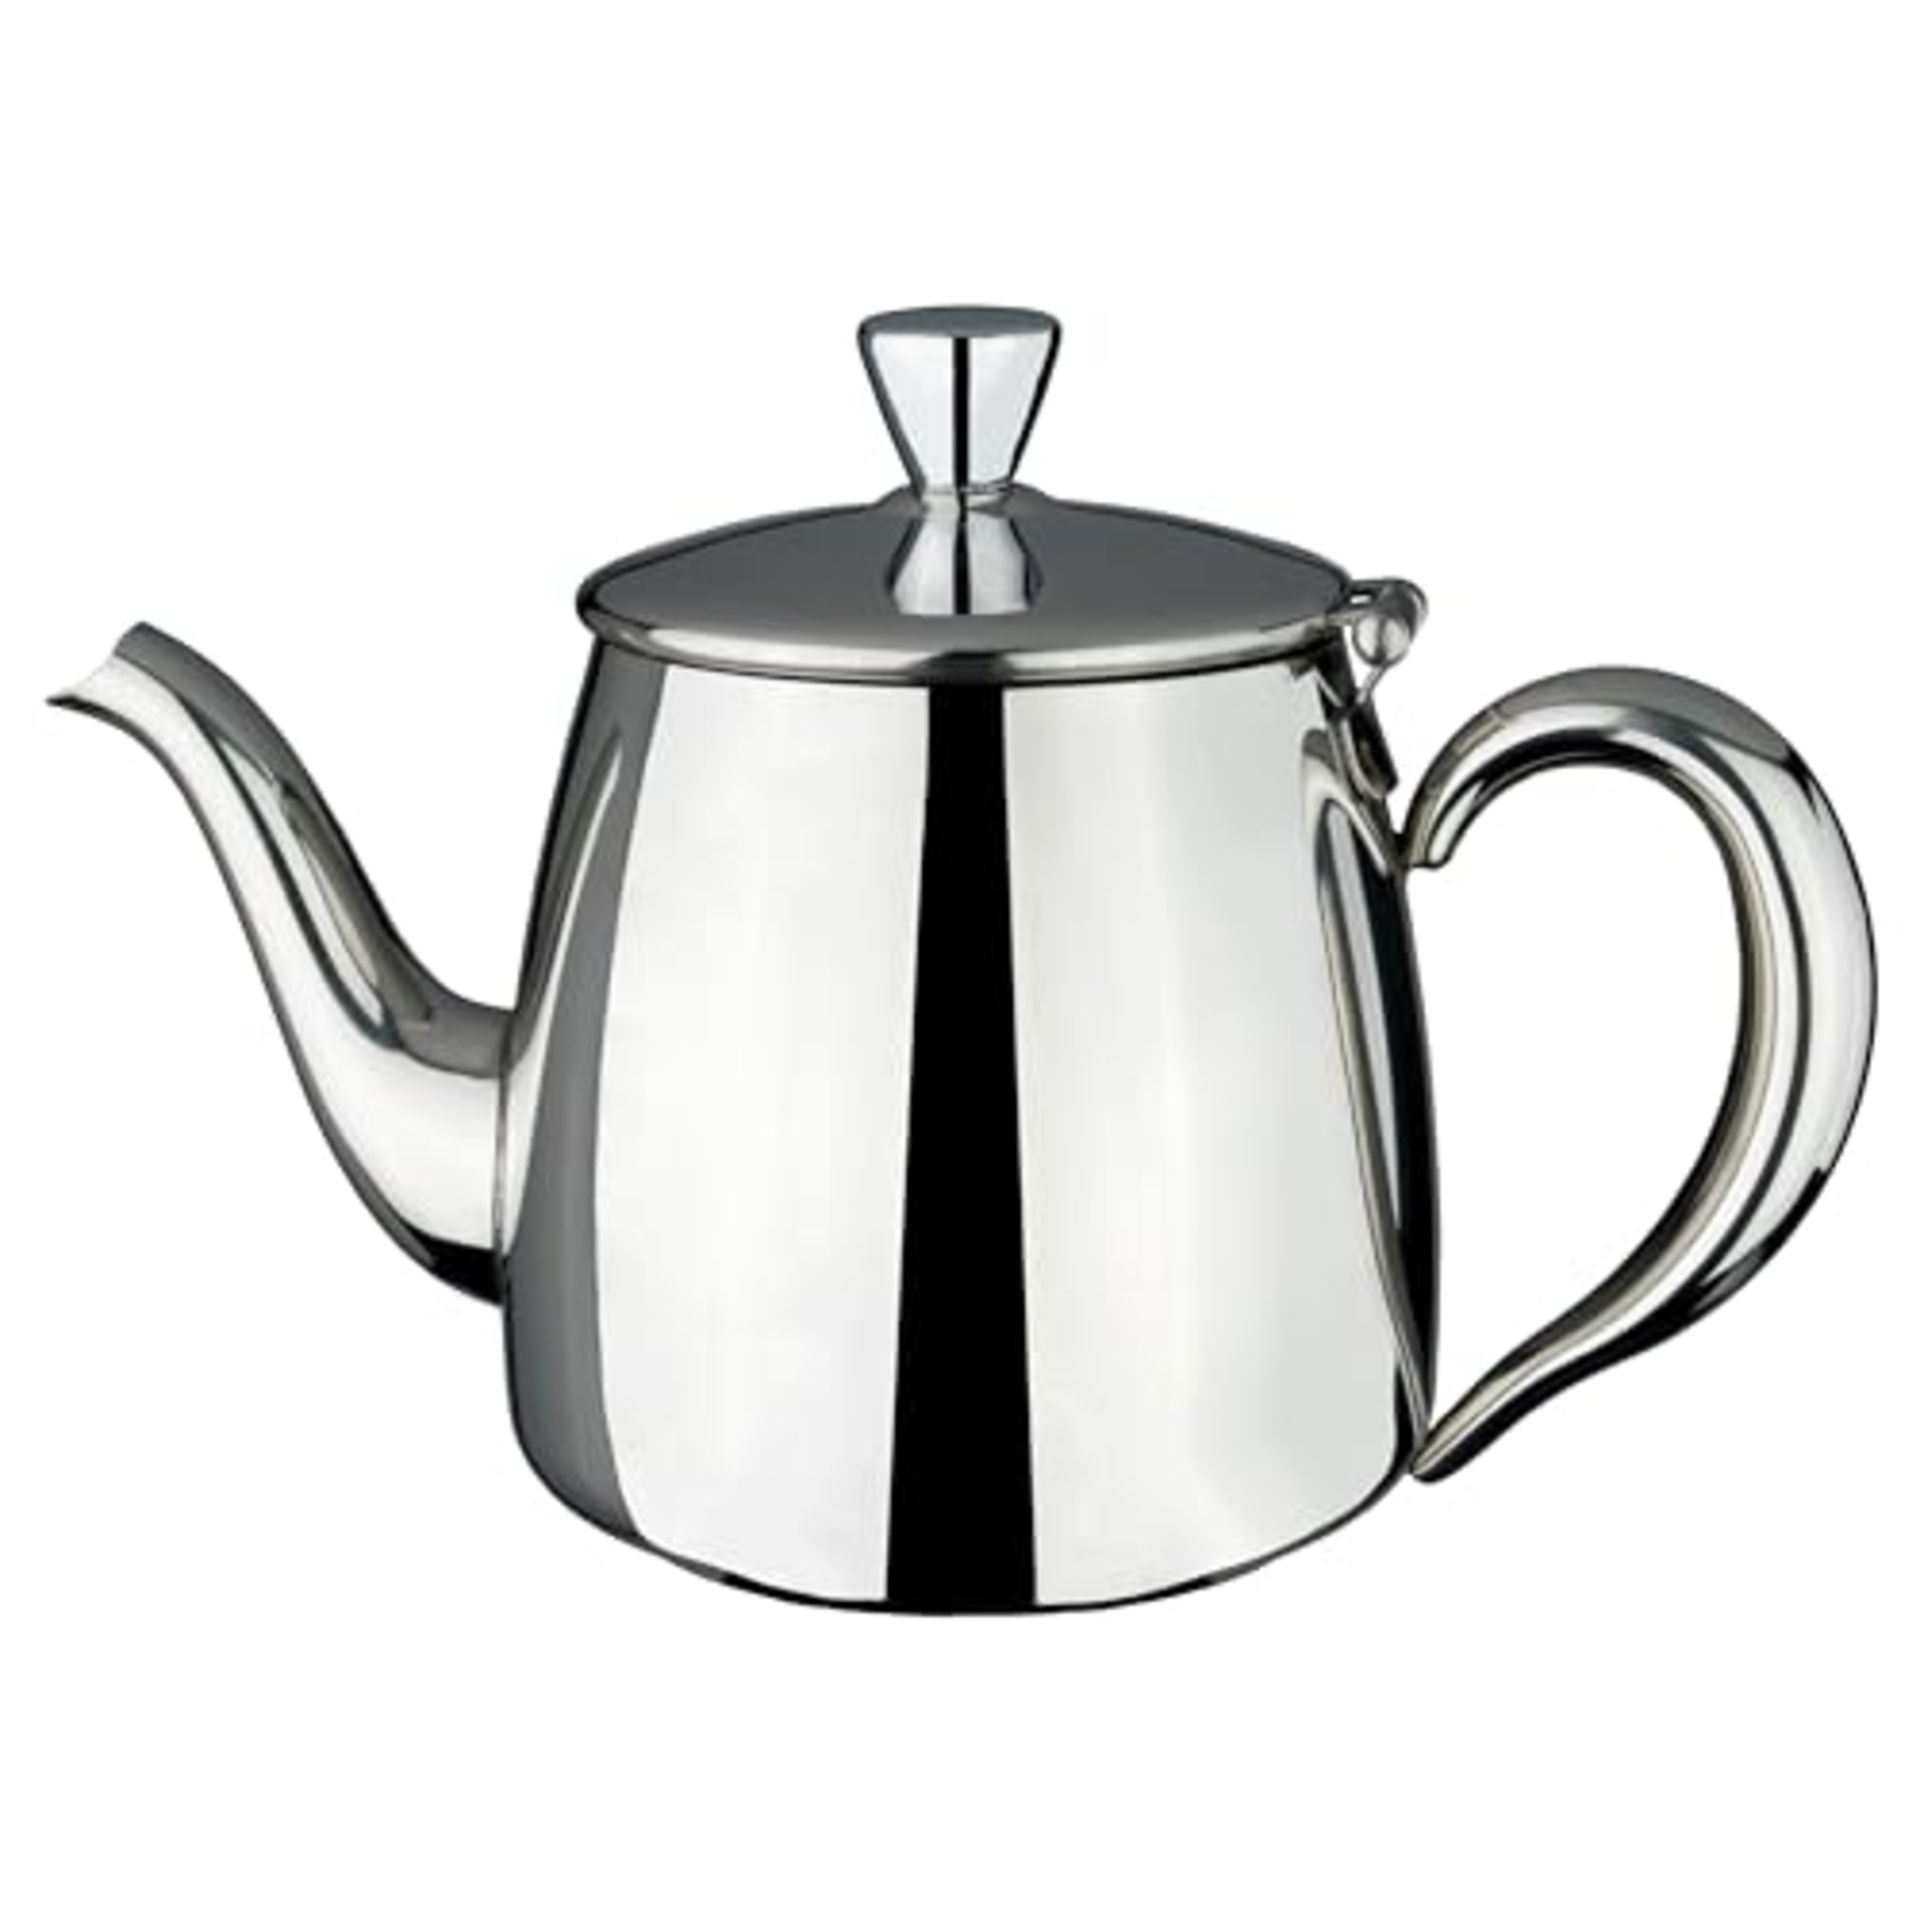 Café Olé PT-018 Premium Tea Pot, 18/10 Stainless Steel, Mirror Polished, 18oz, Stay